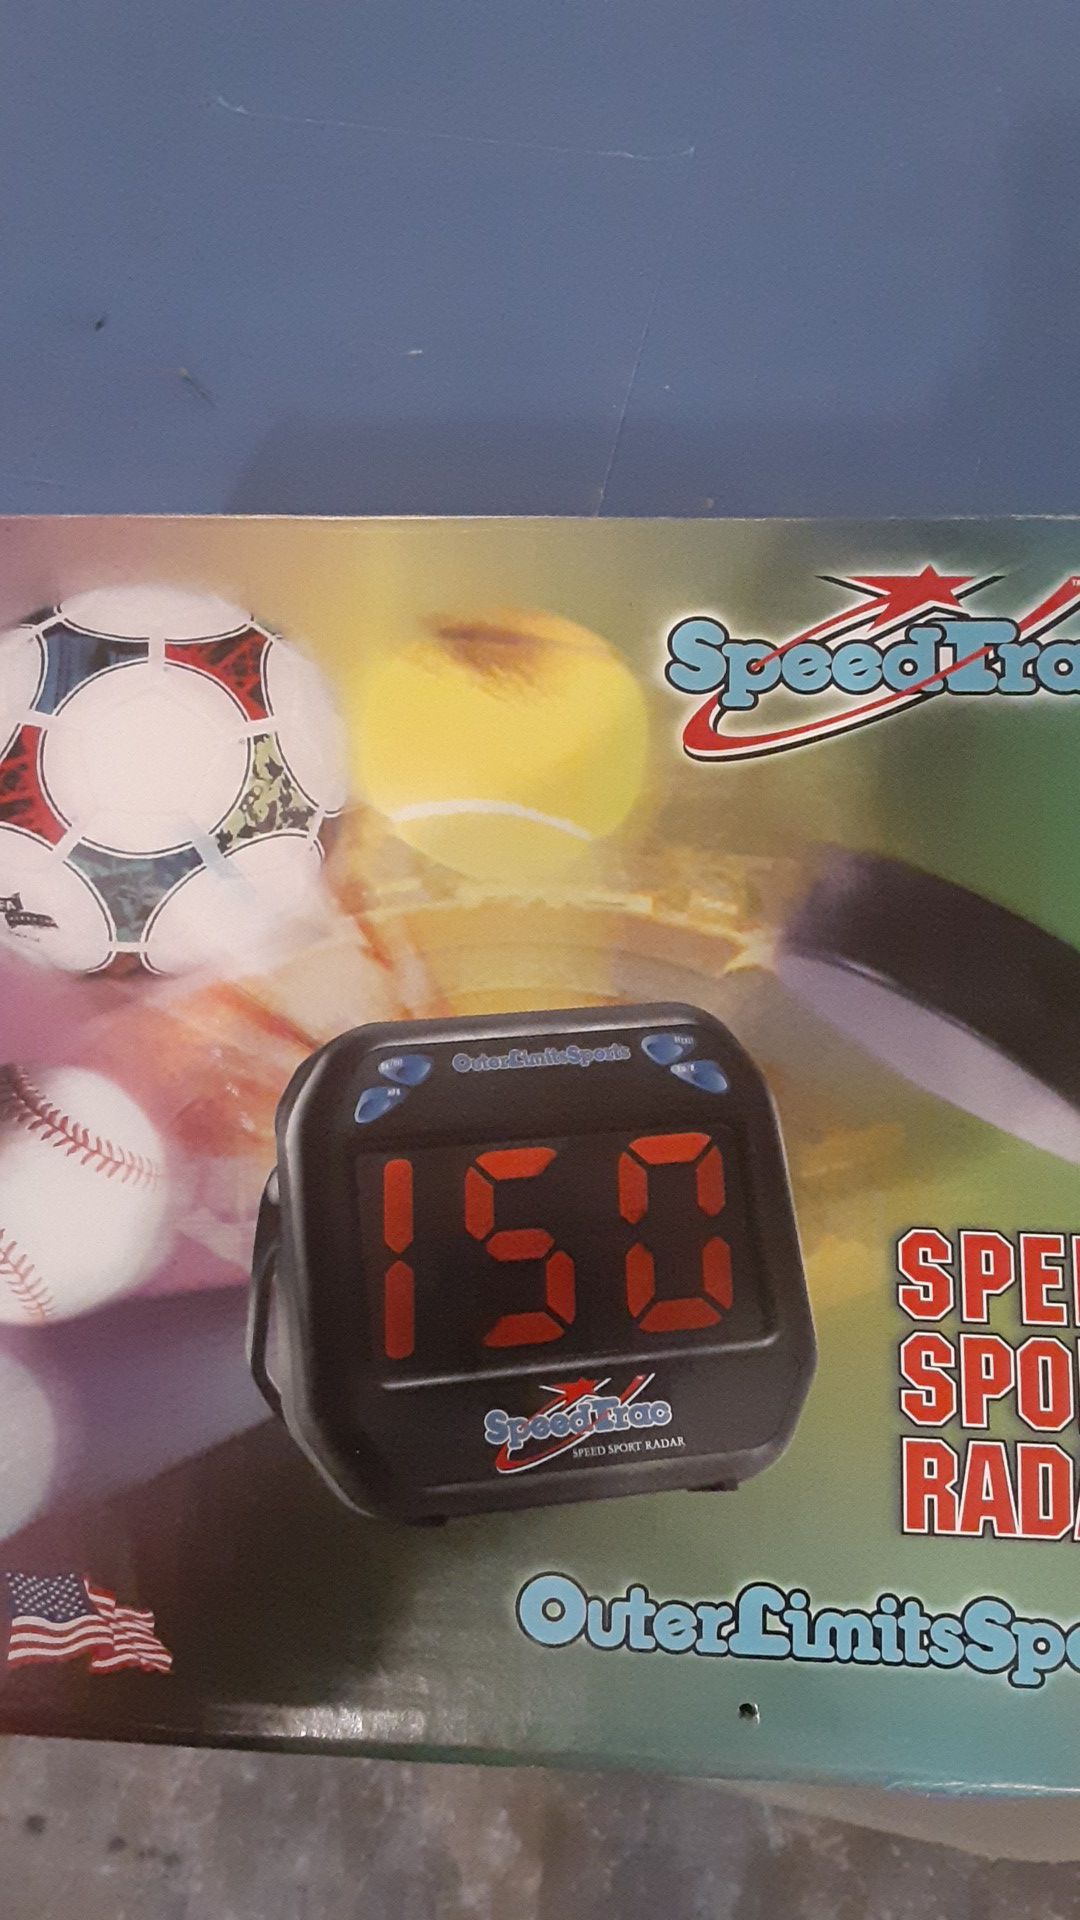 Radar speed for outdoor sports